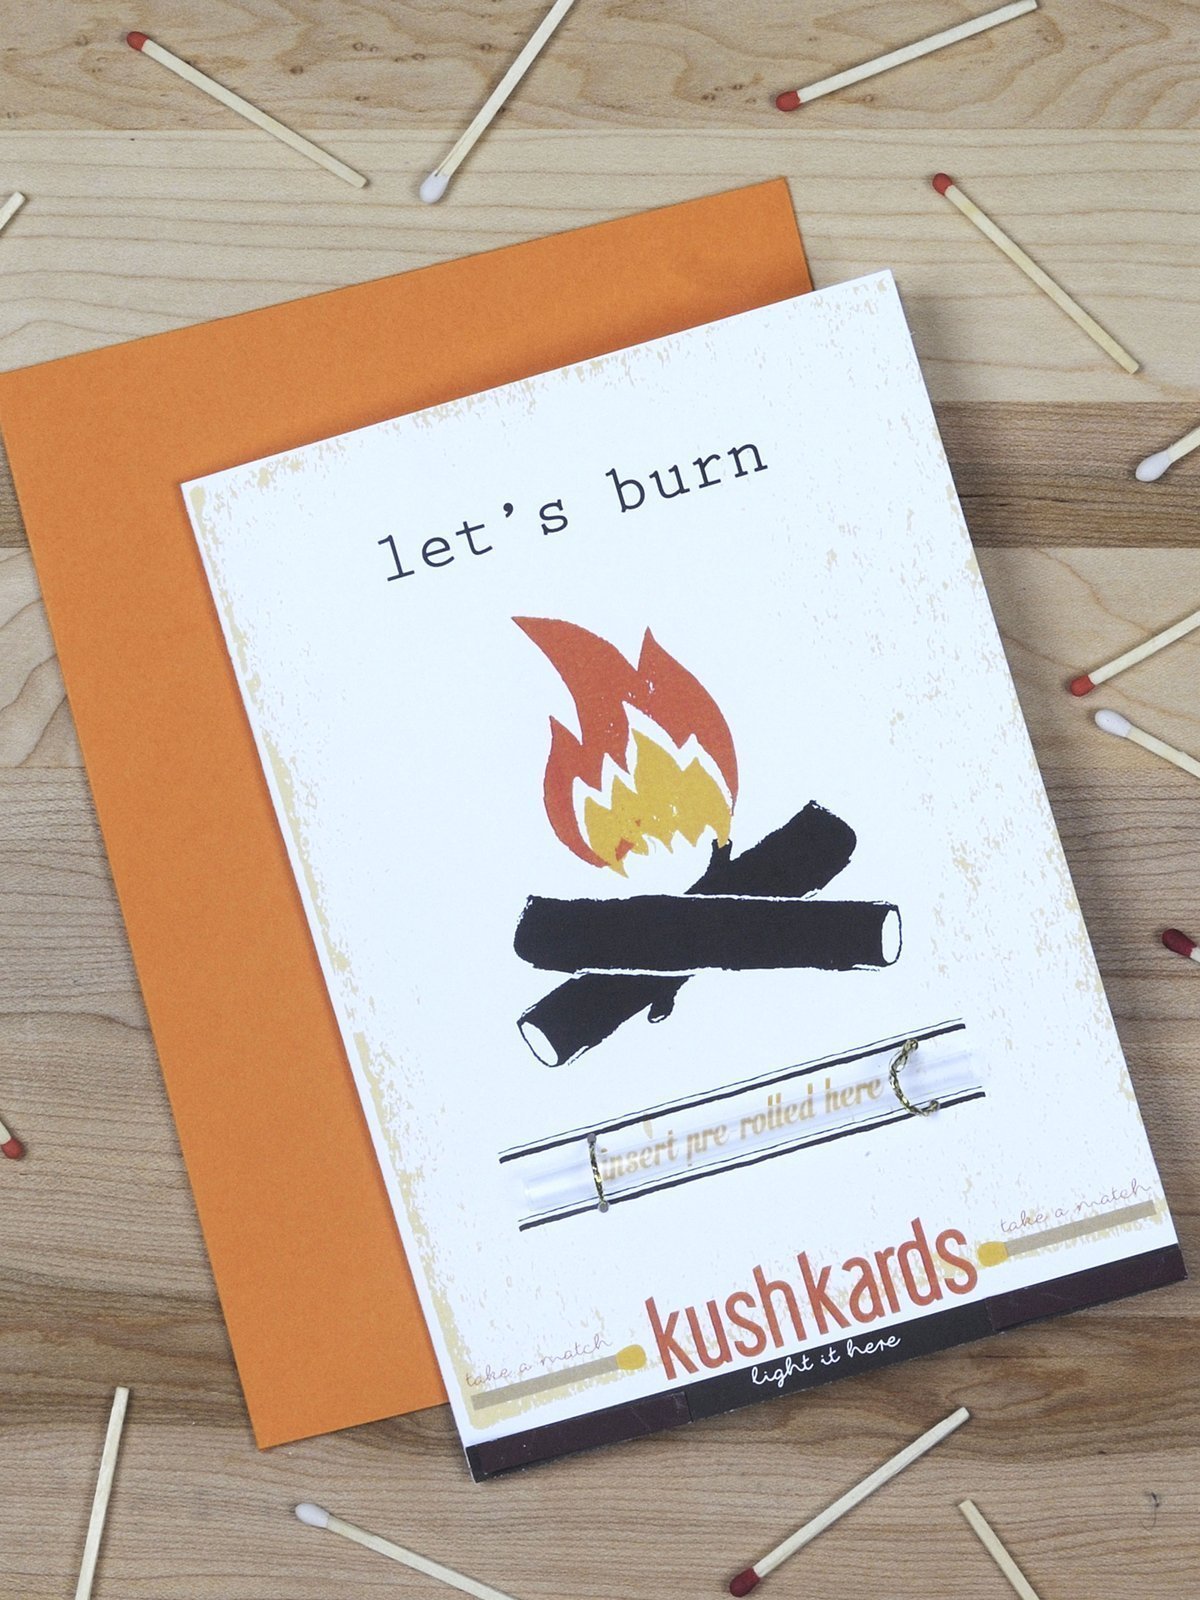 kushkards lets burn stoner greeting card